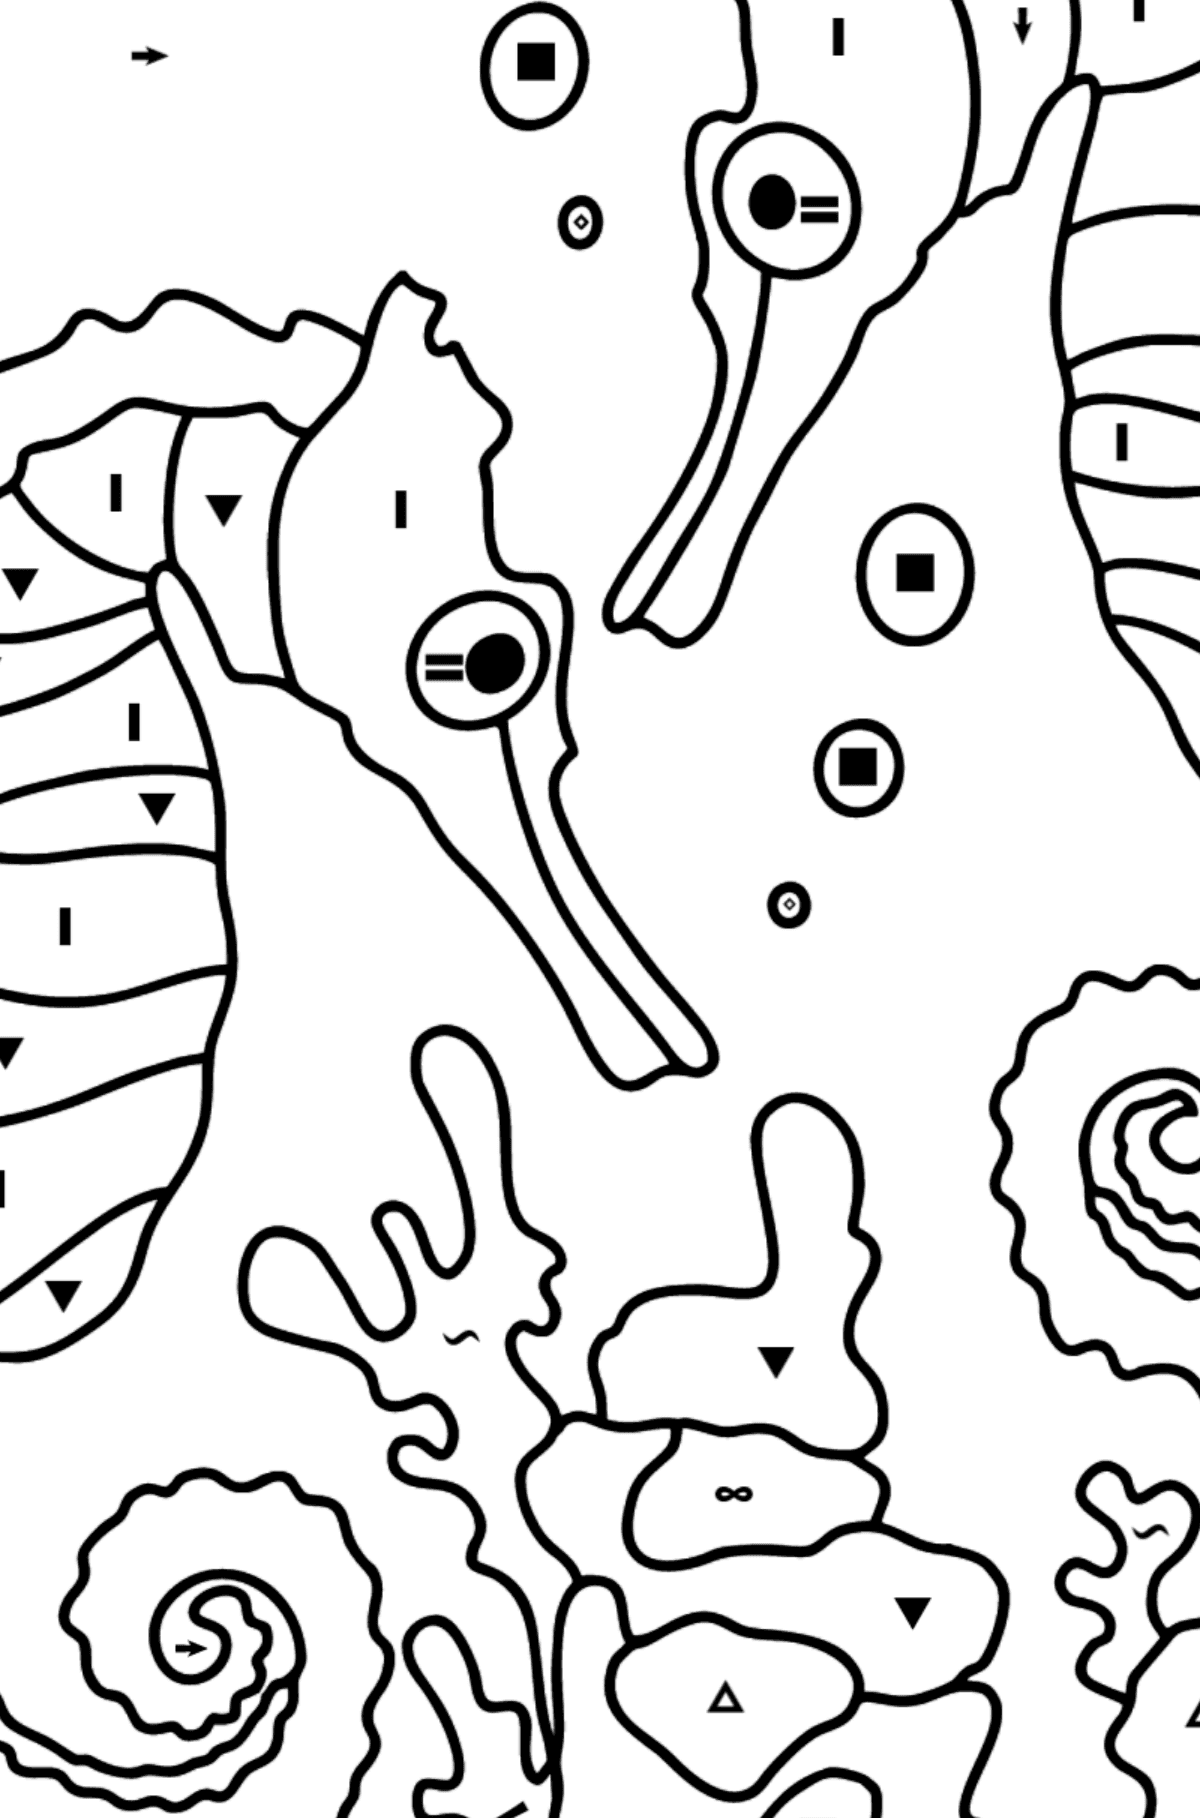 Dibujos para colorear caballitos de mar (difícil) - Colorear por Símbolos para Niños